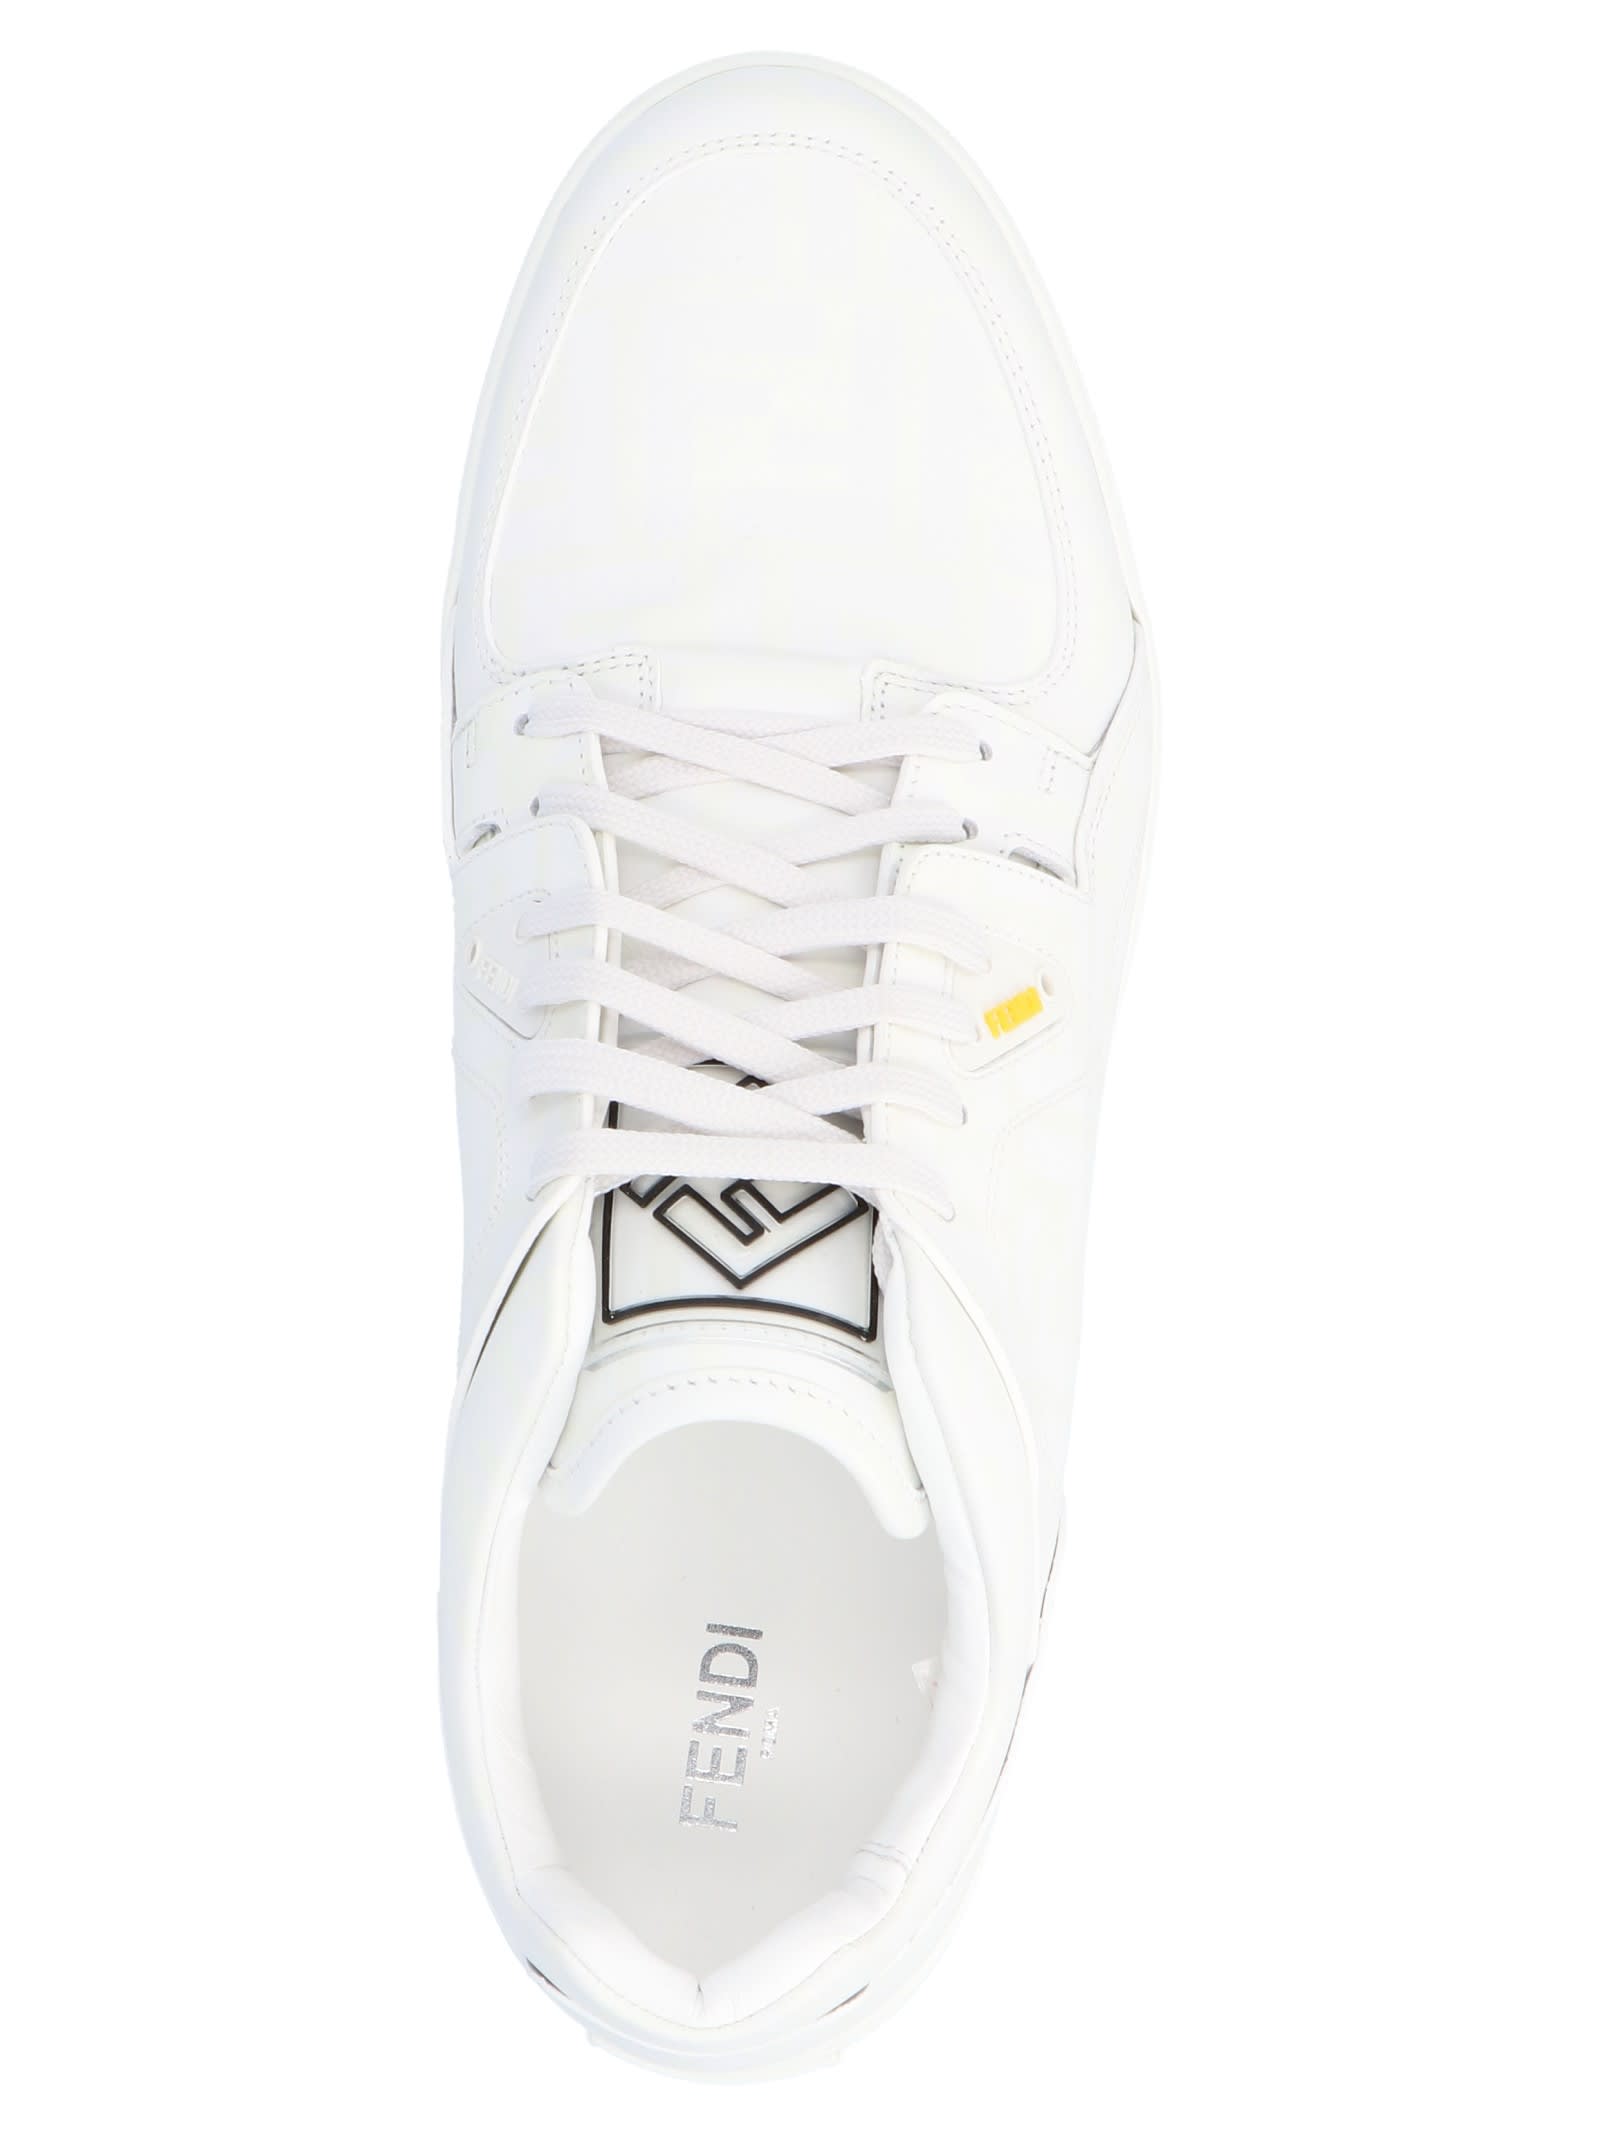 fendi shoes white